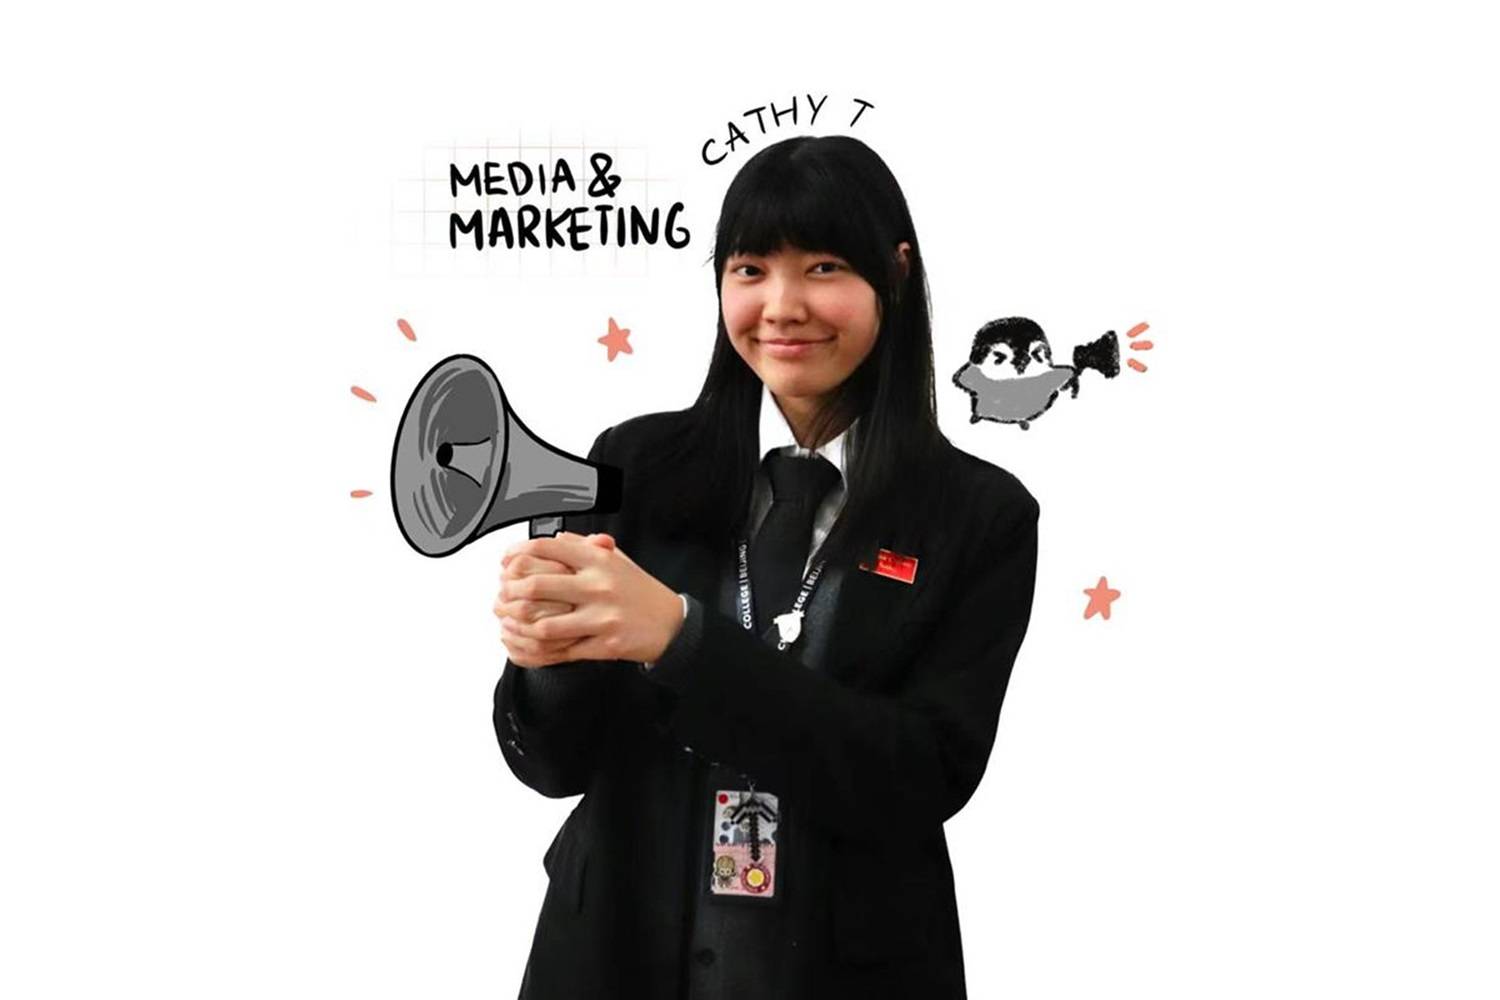 Media & Marketing Prefects: Cathy T